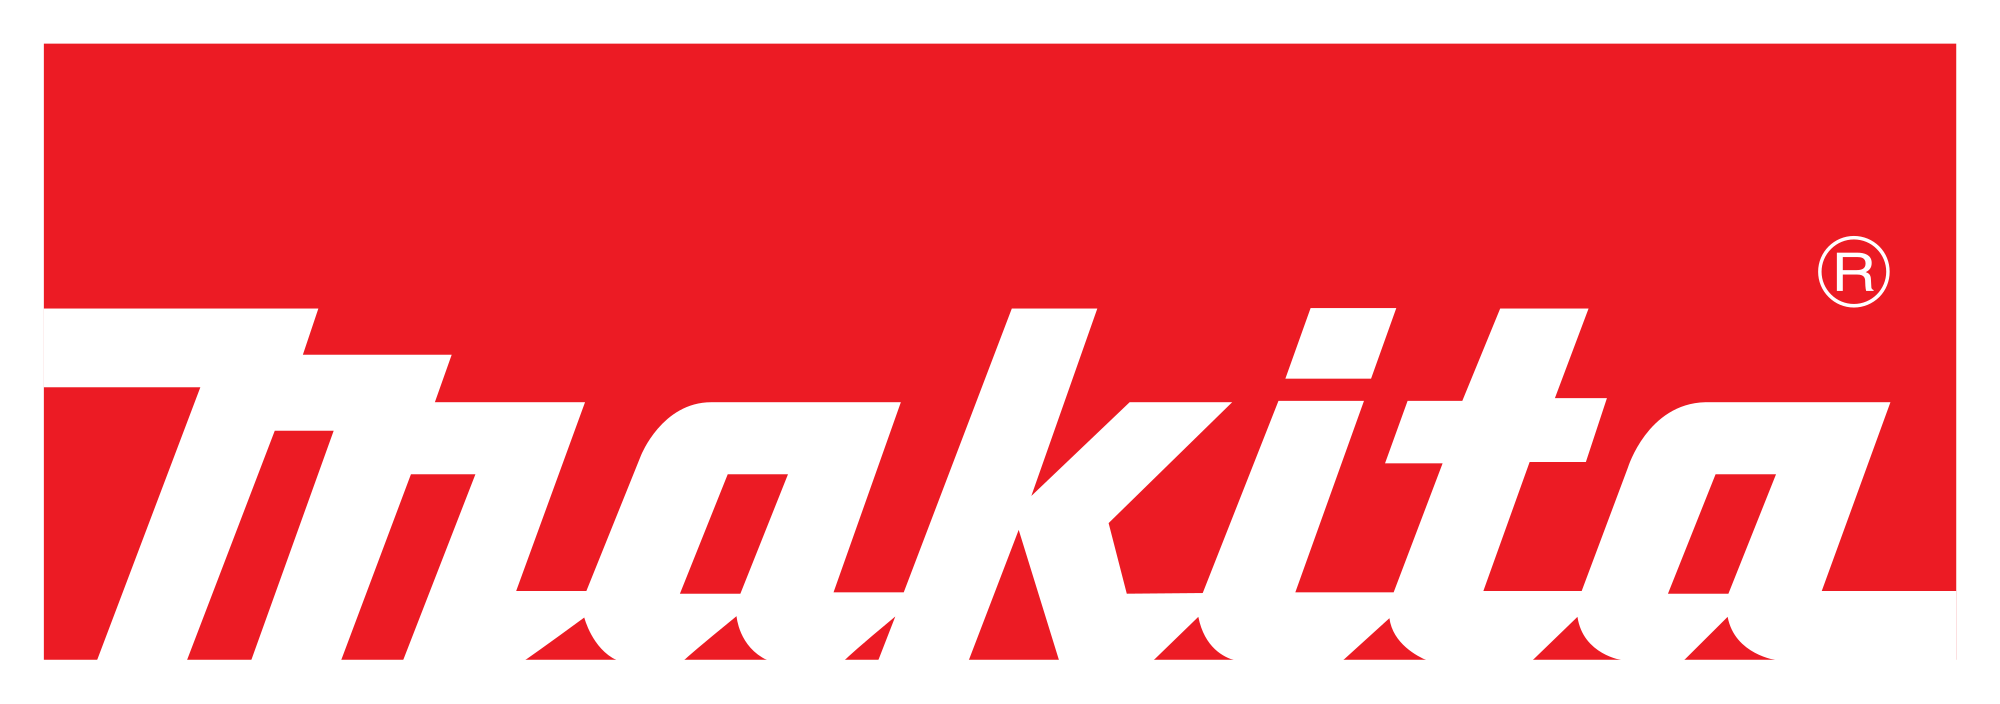 Makita Logo Image